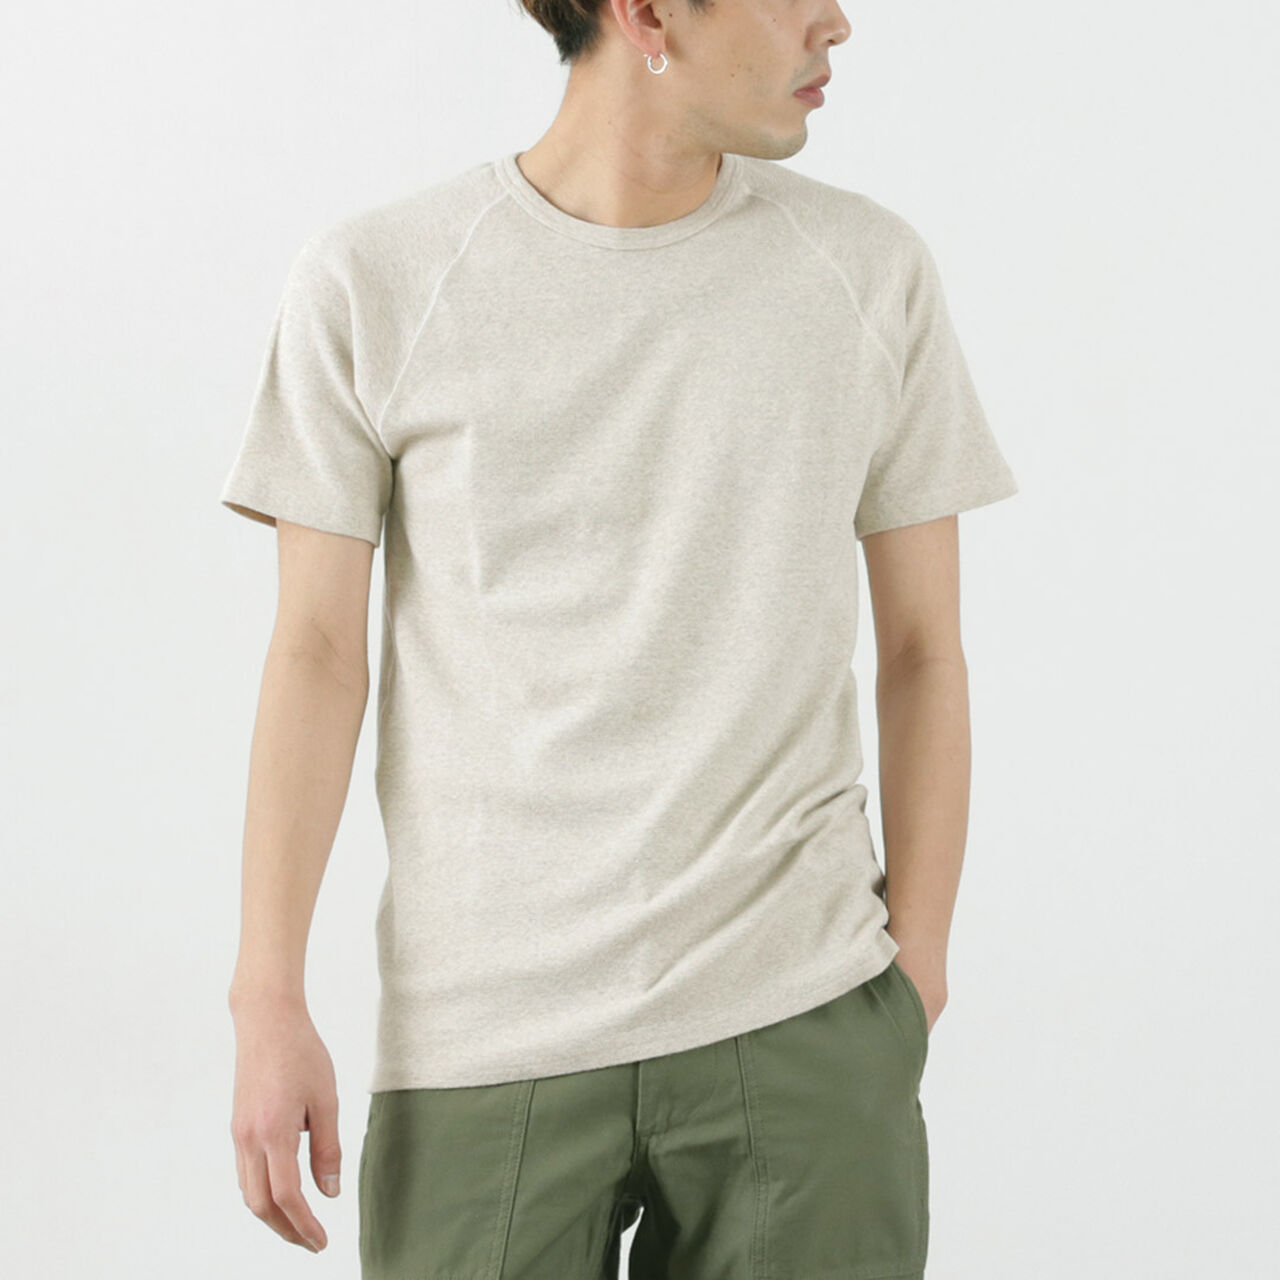 Raffy Spun-fleece Short-Sleeved T-Shirt,Oatmeal, large image number 0